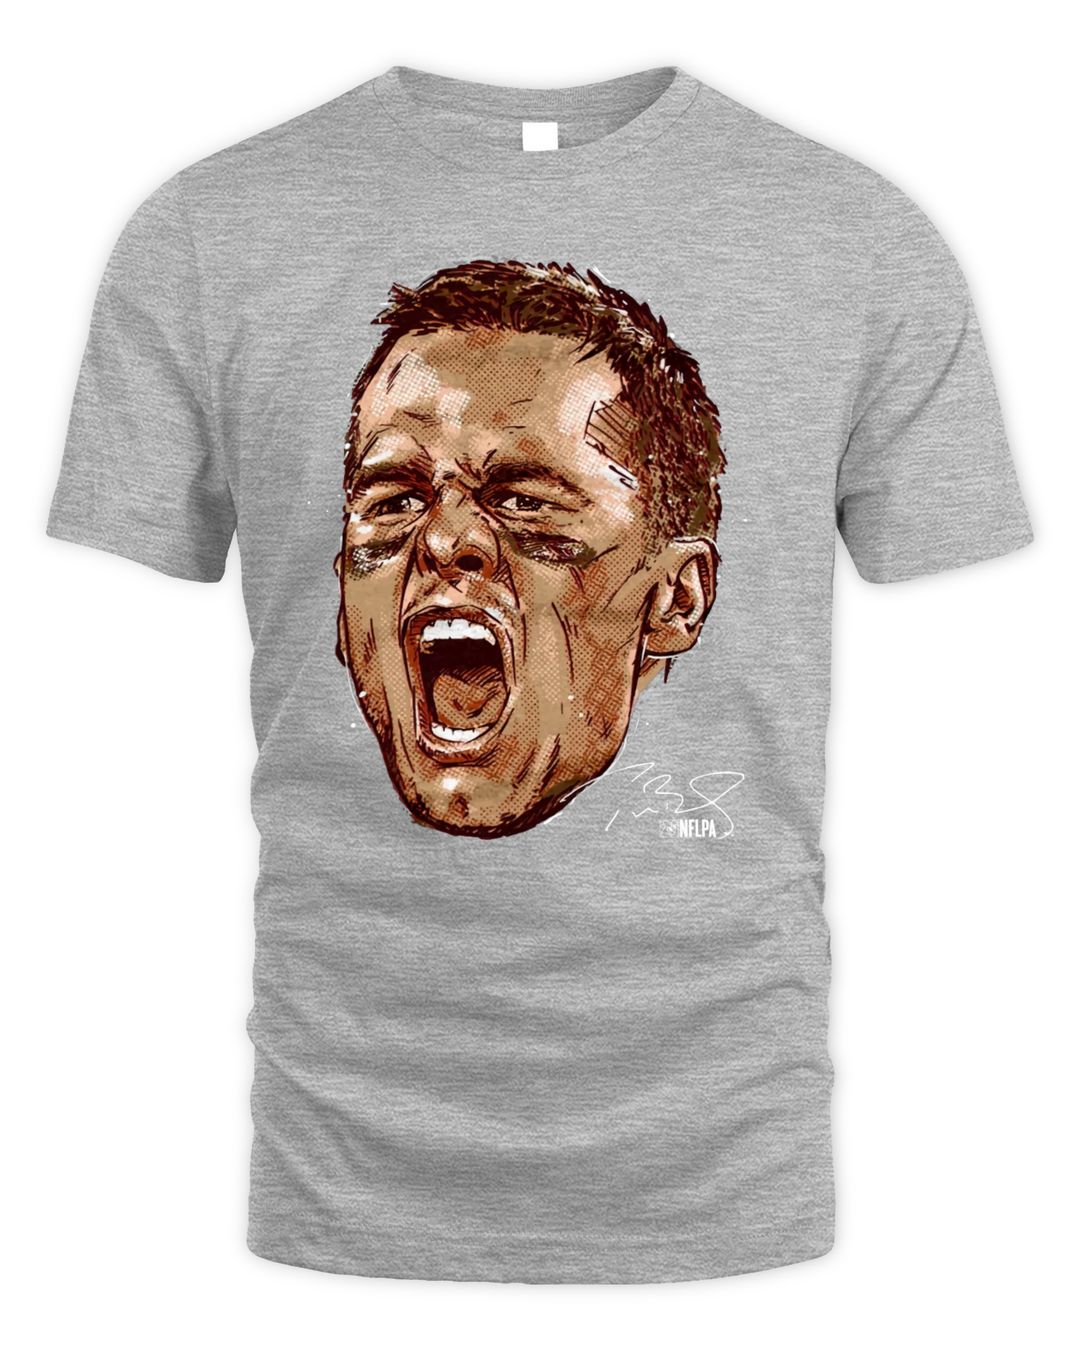 Tom Brady Merch Scream Shirt